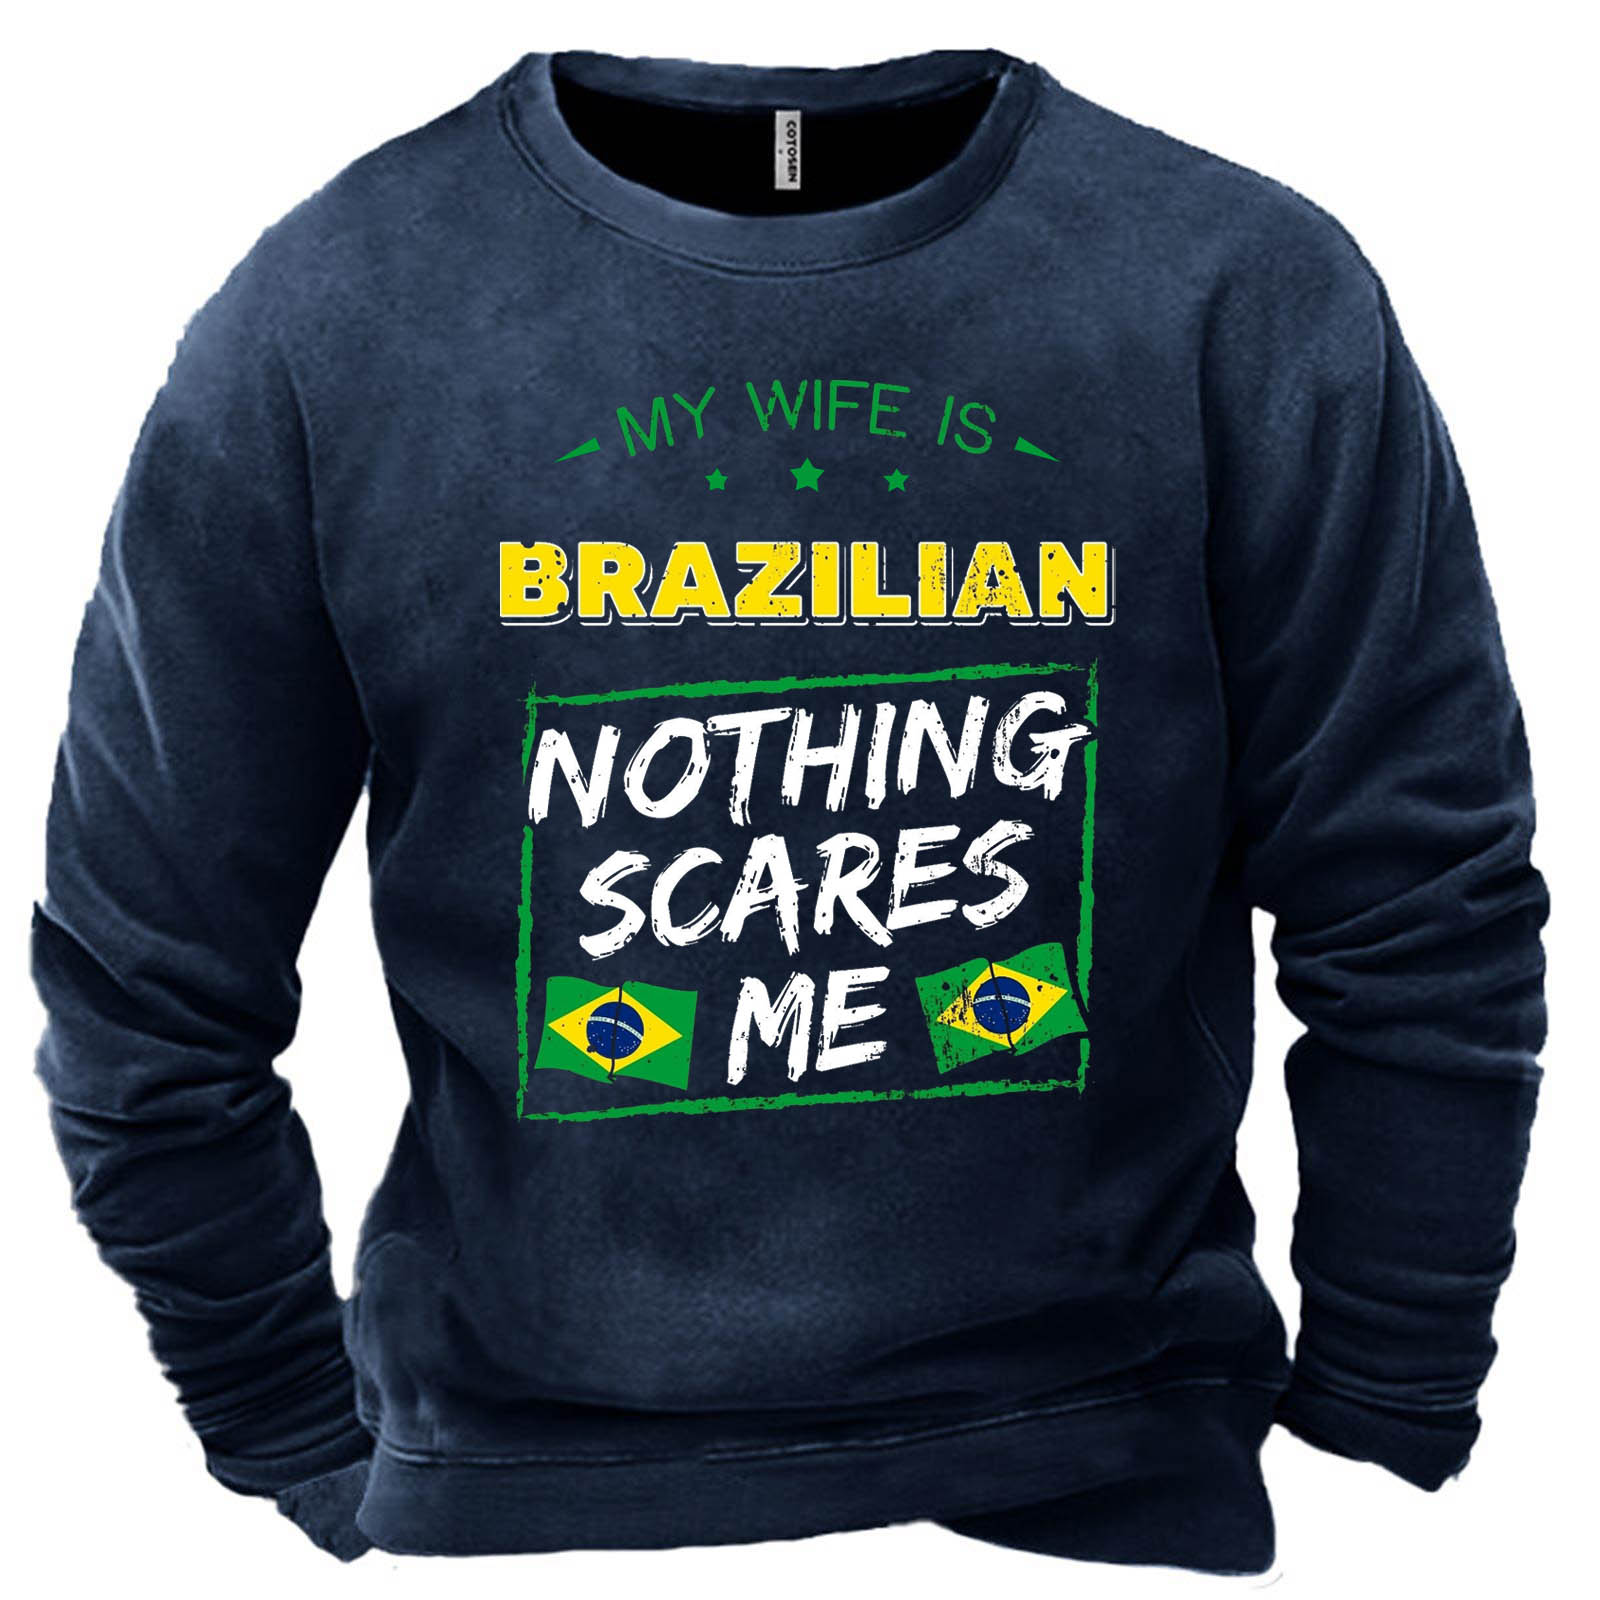 Men's My Wife Is Chic Brazilian Nothing Scares Me Print Sweatshirt